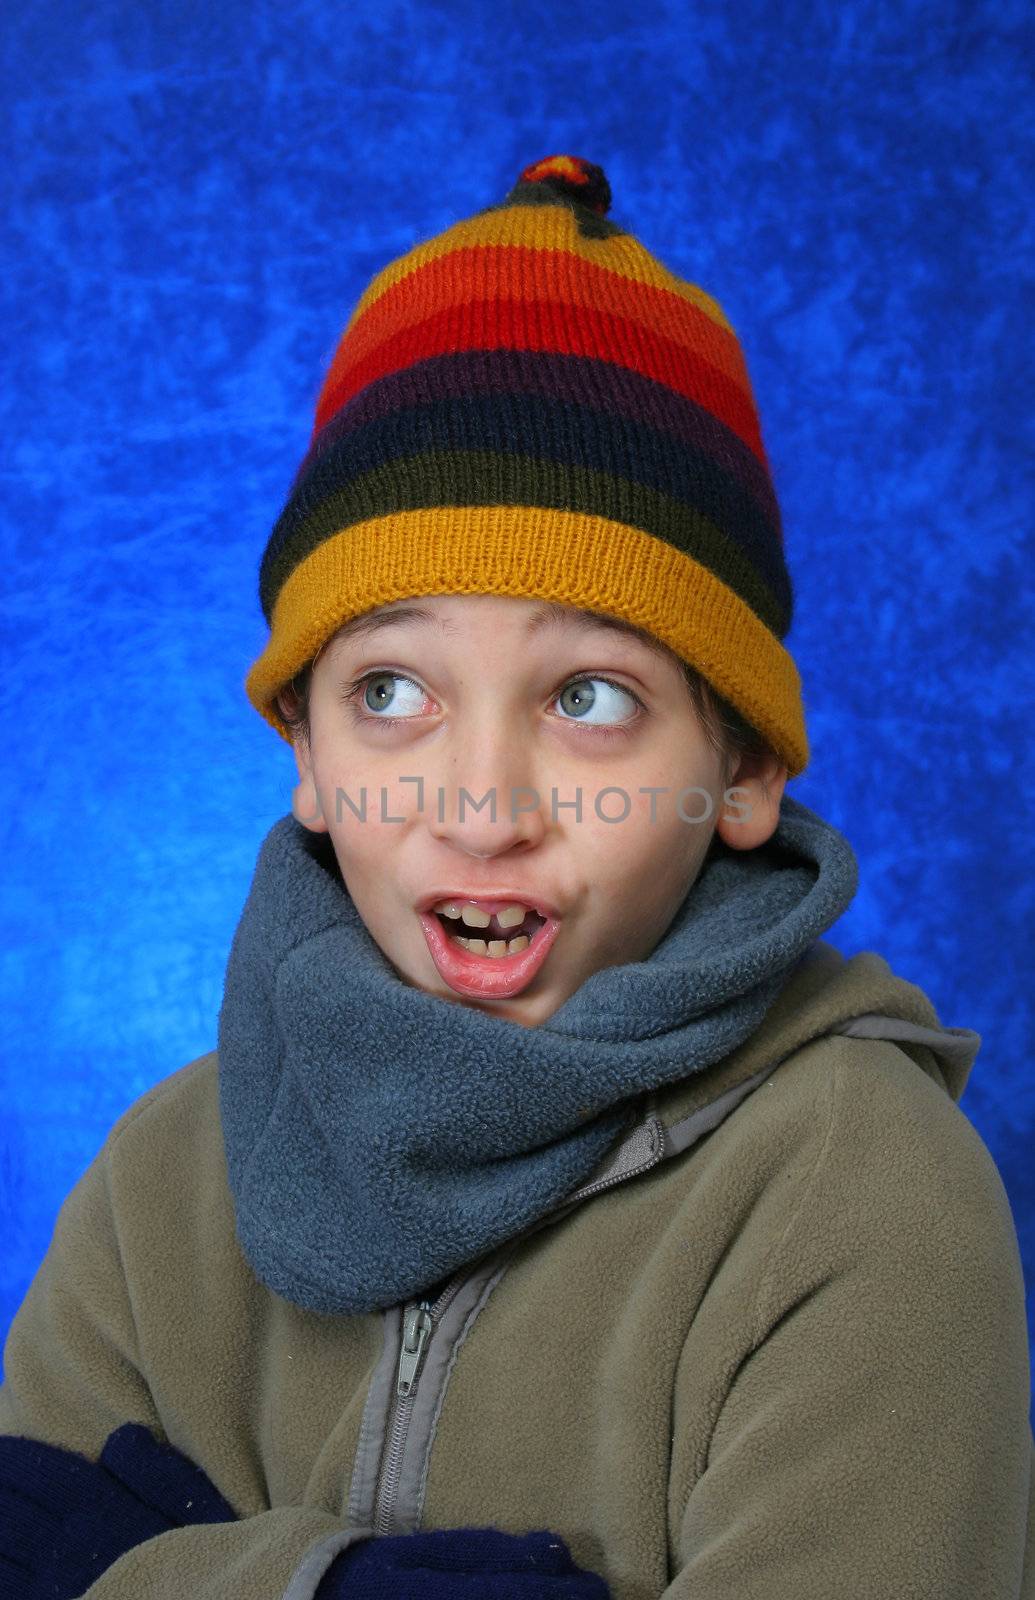 Boy having fun in winter by Erdosain